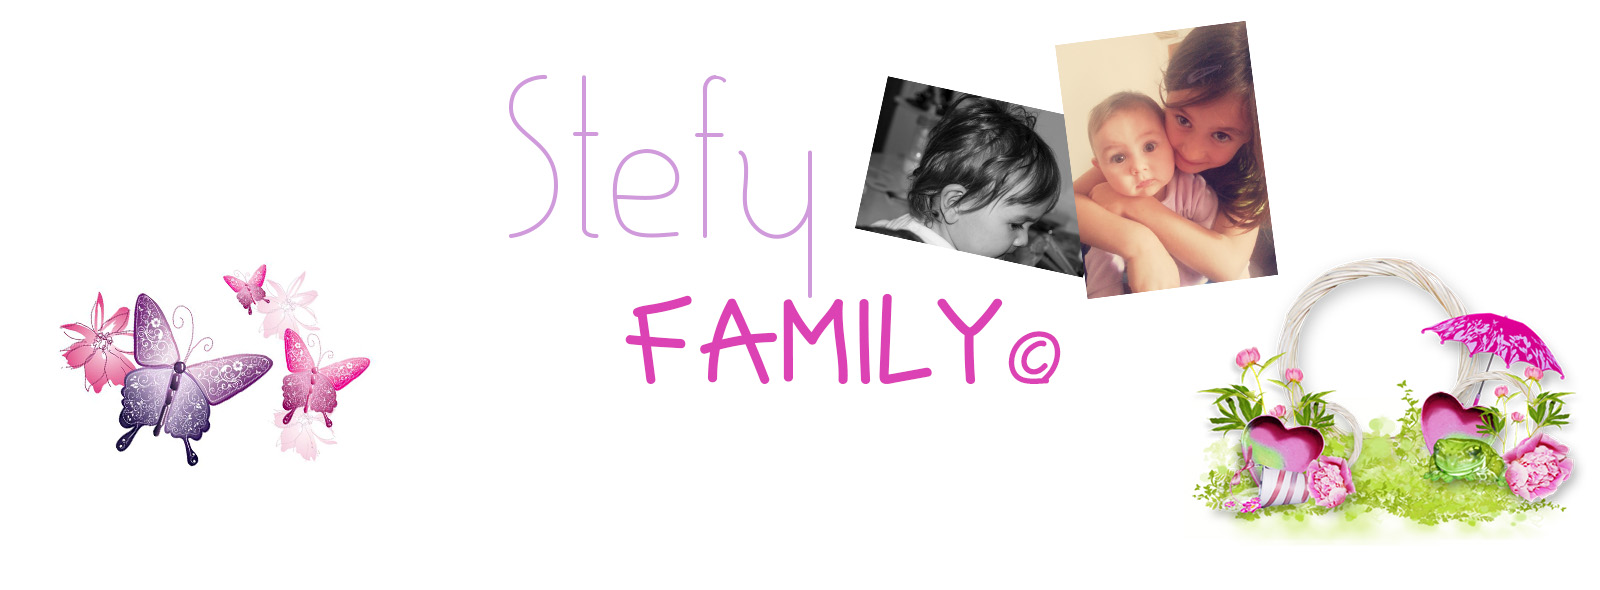 stefyfamily